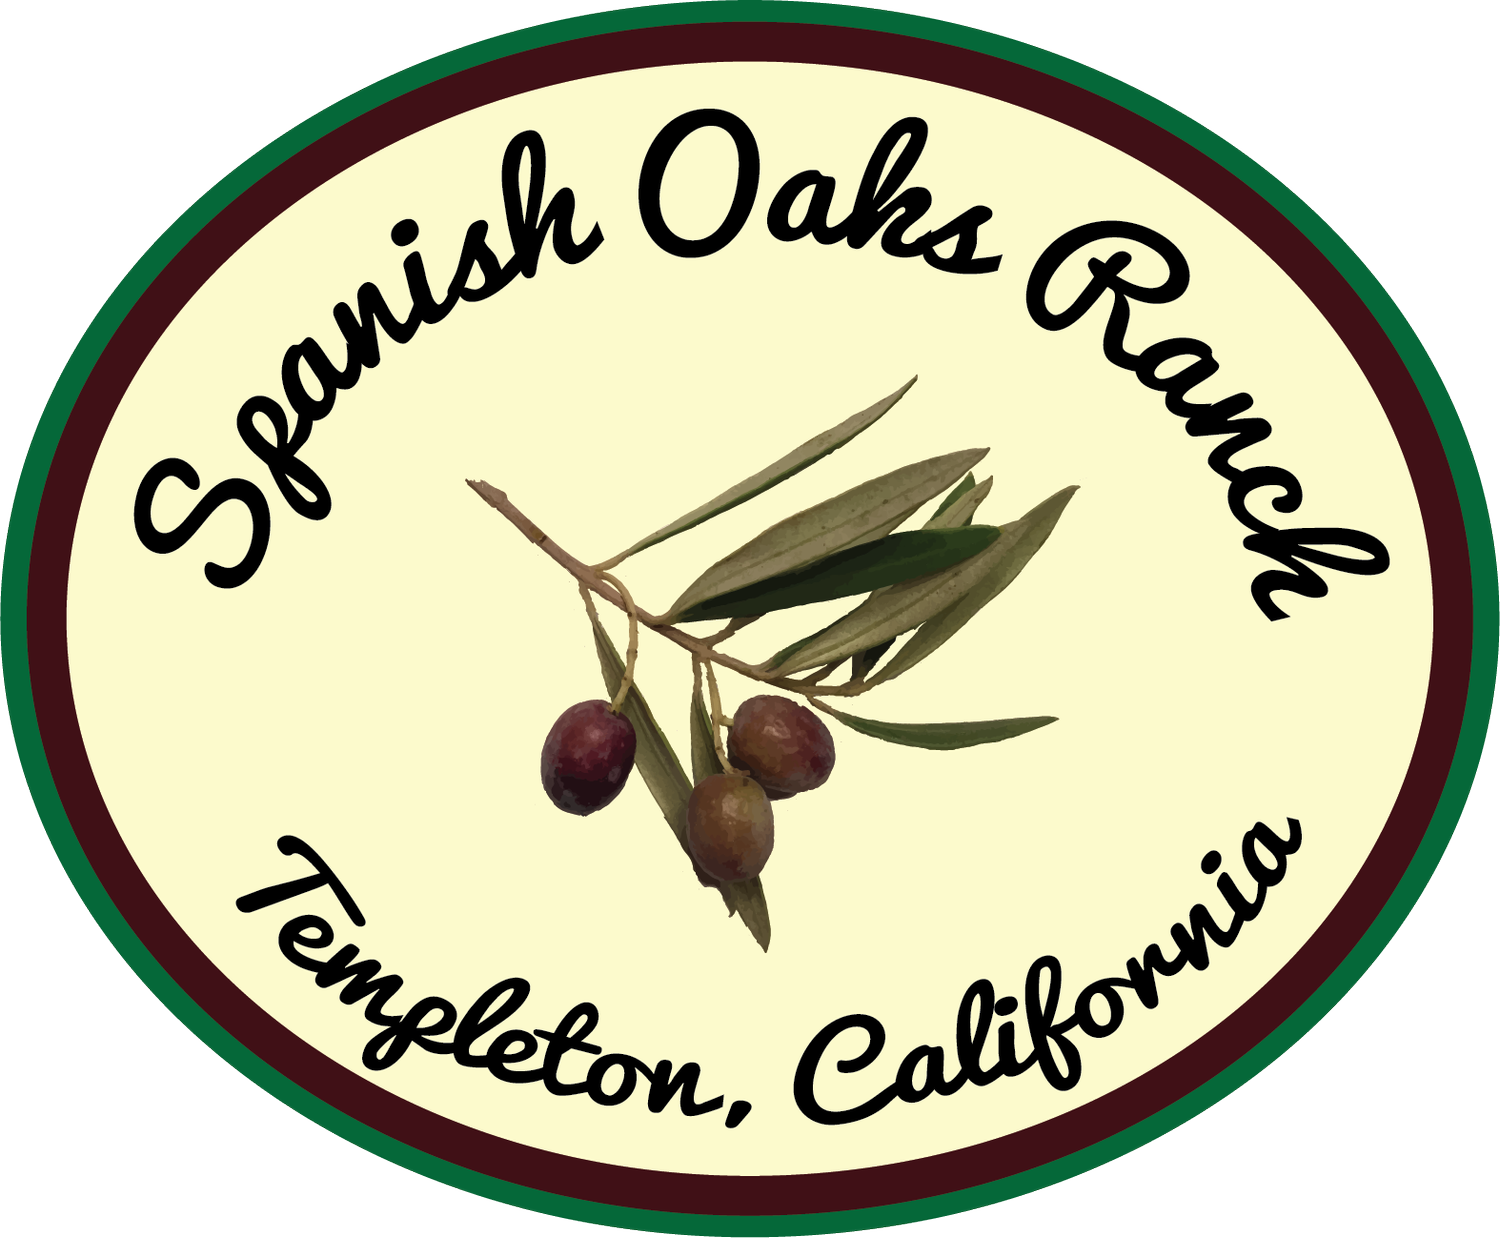 Spanish Oaks Ranch Olive Oil